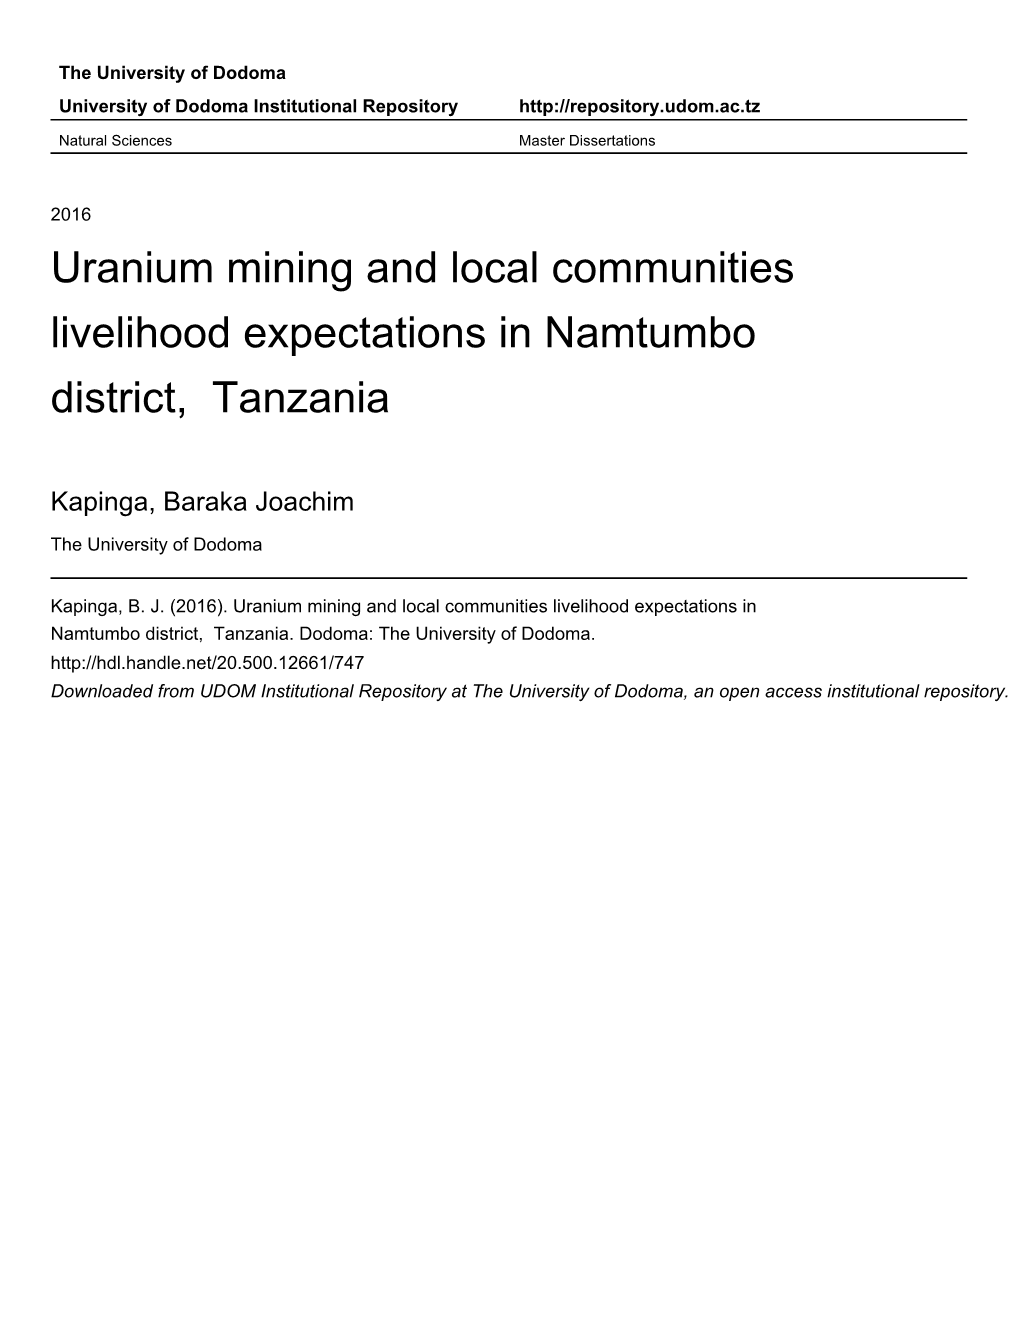 Uranium Mining and Local Communities Livelihood Expectations in Namtumbo District, Tanzania